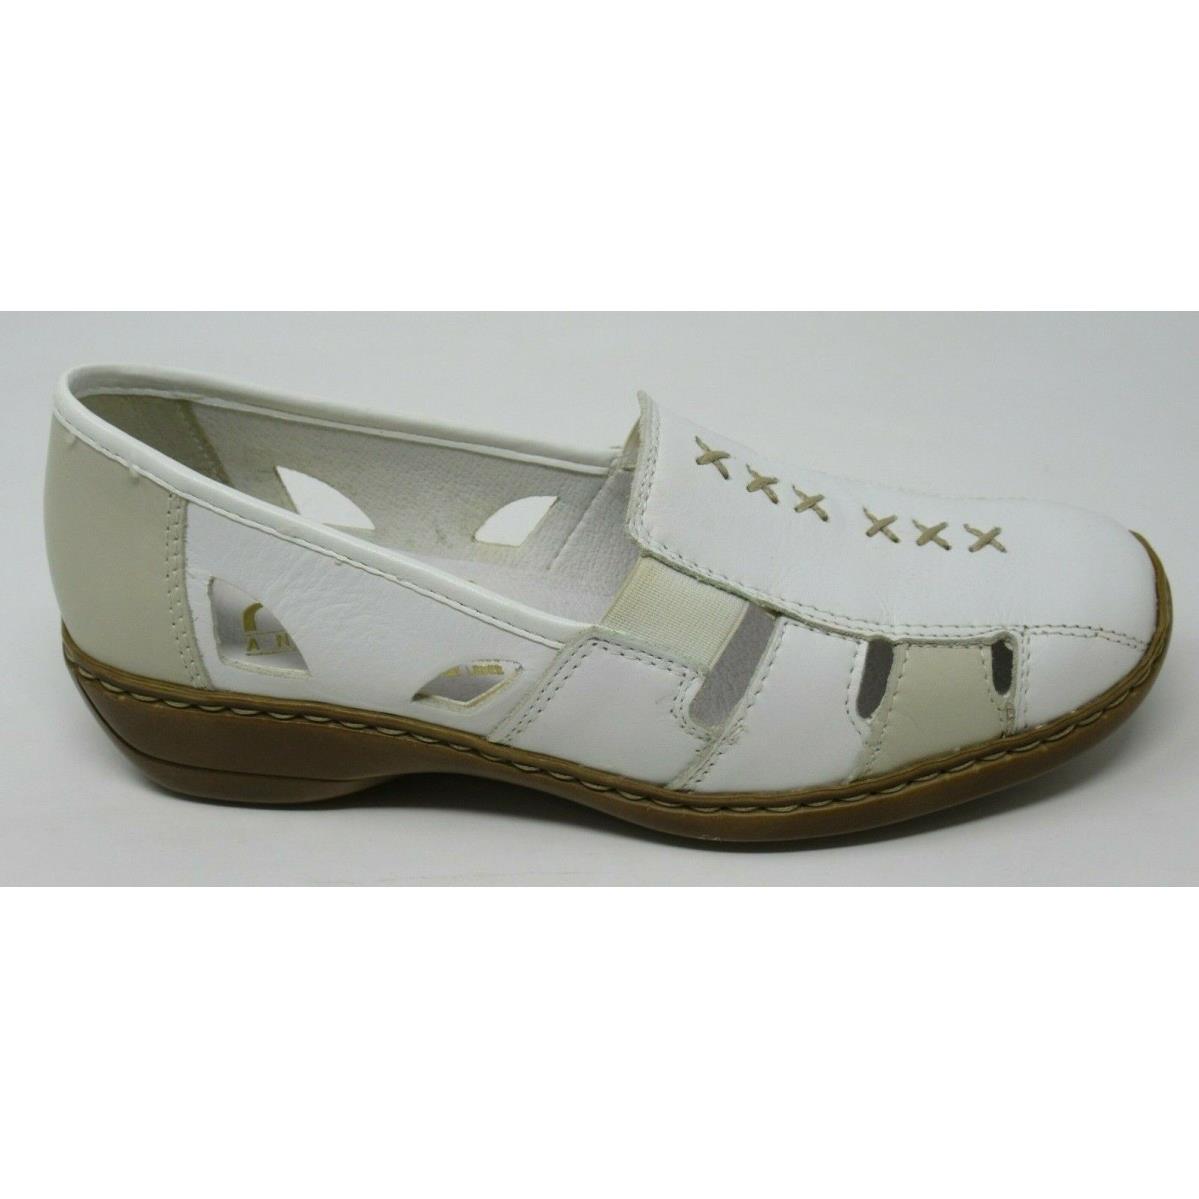 Rieker Women`s 41385 White Lea. Slip-on Spring/summer Loafers Shoes SZ 36 US 5.5